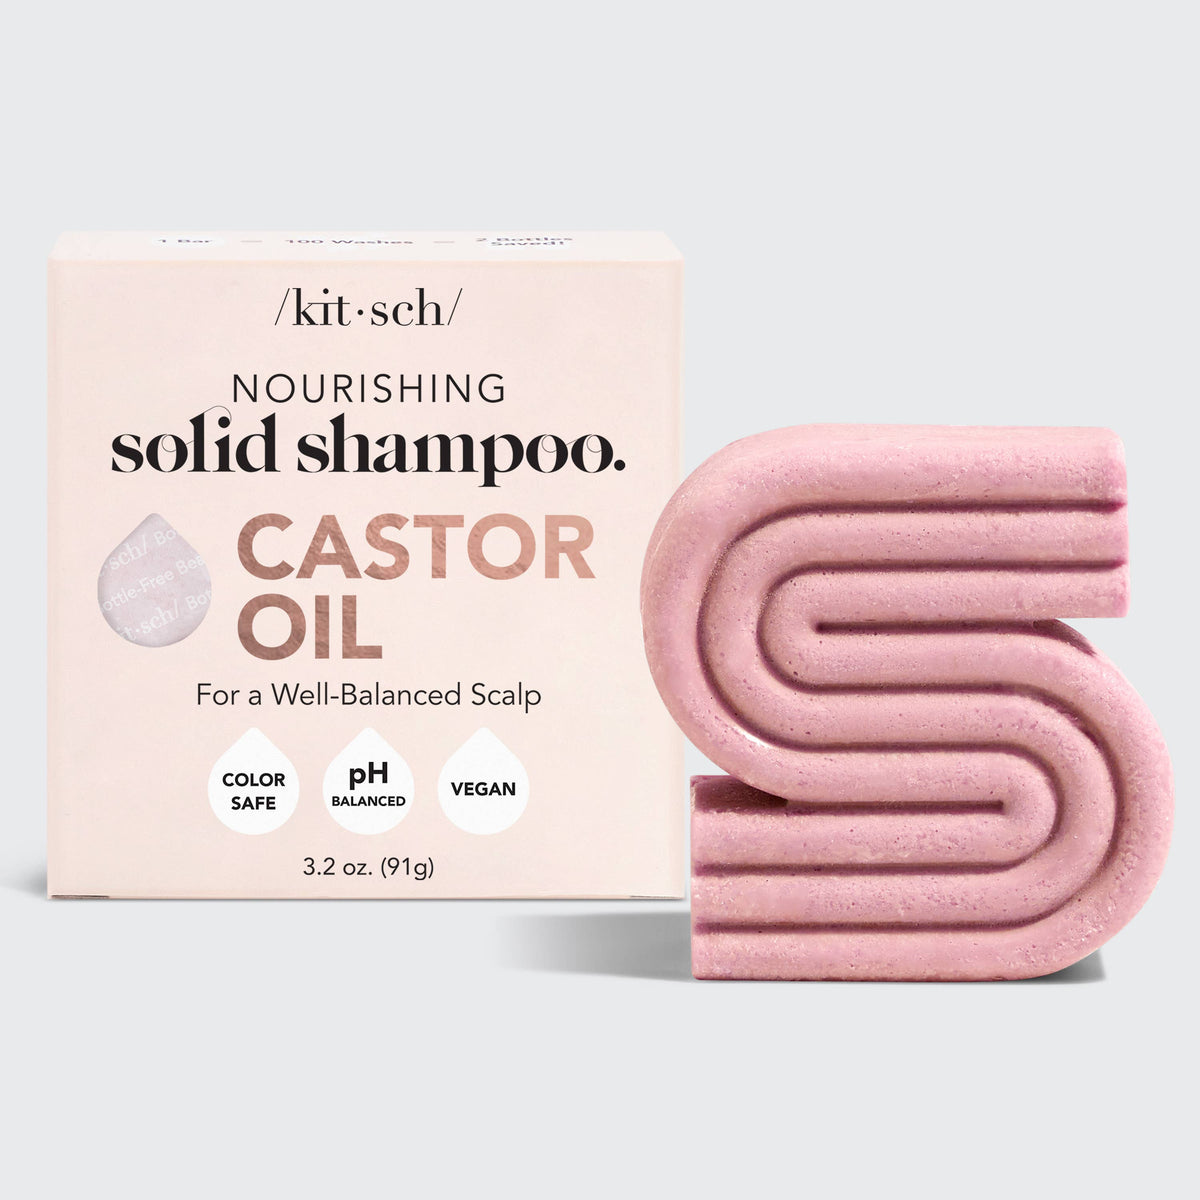 KITSCH - Castor Oil Nourishing Shampoo Bar